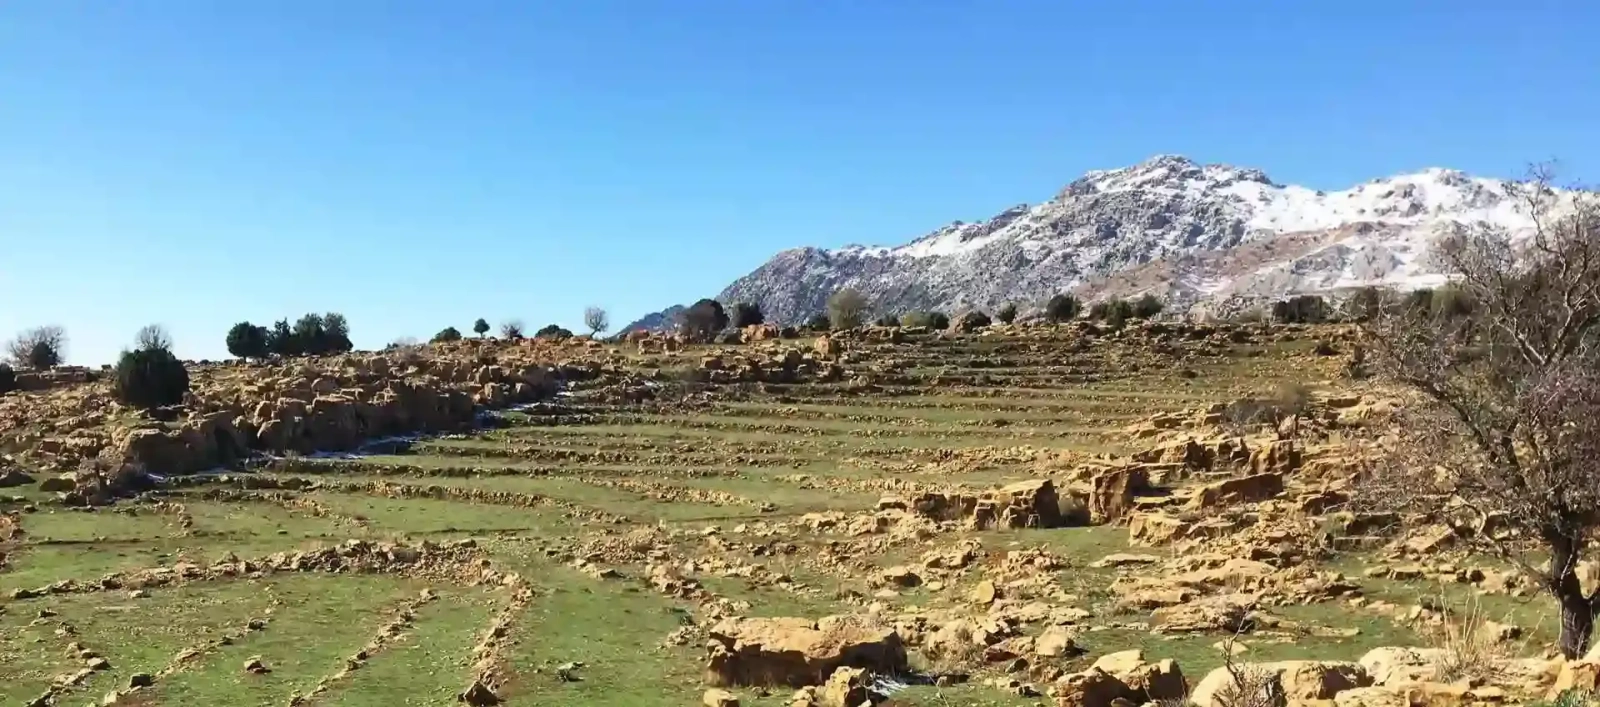 The historical valley of Wadi Nahr Ibrahim